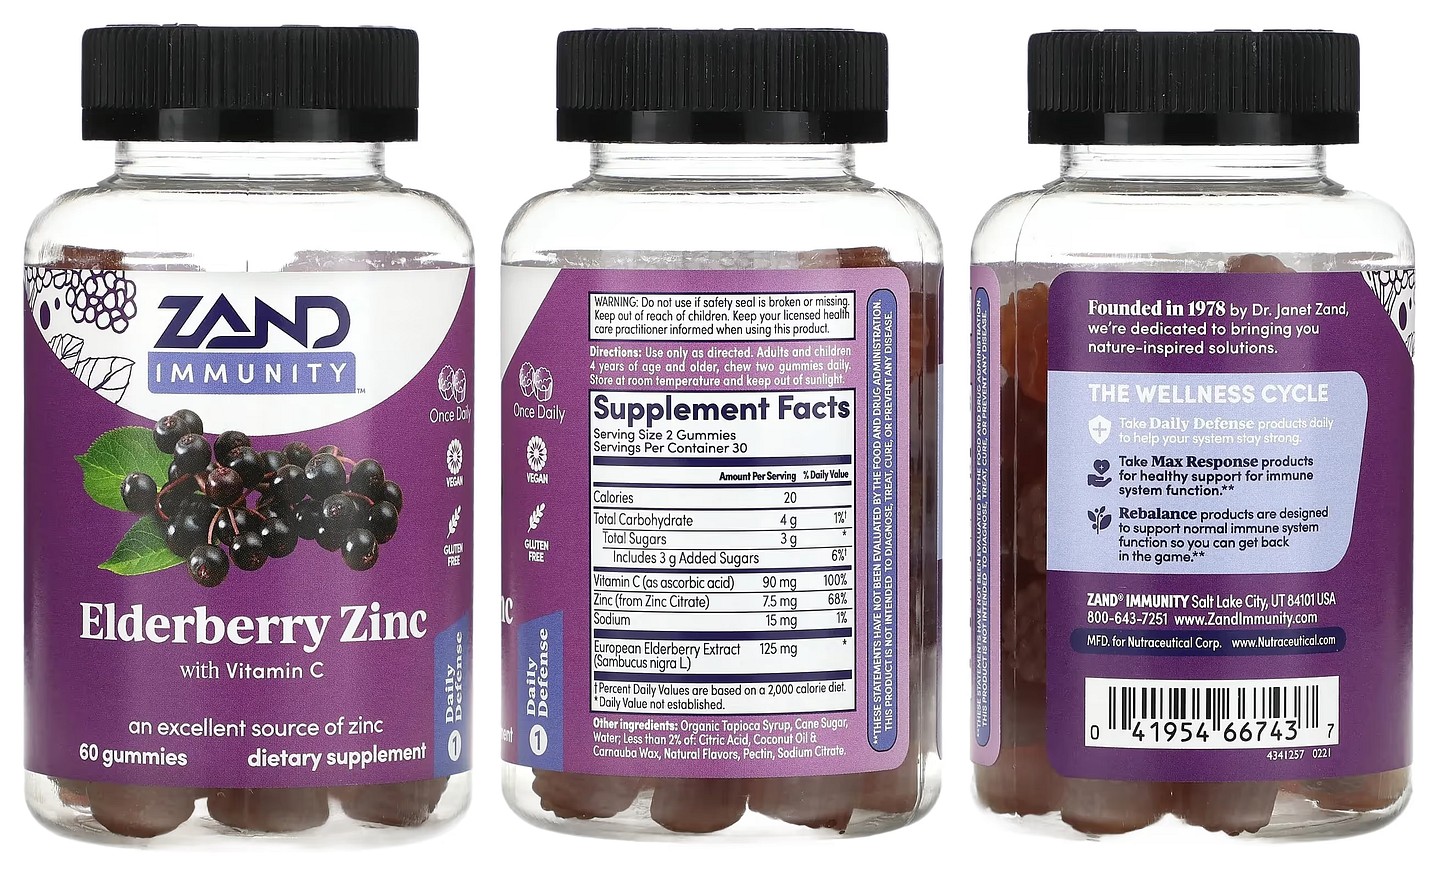 Zand, Immunity packaging